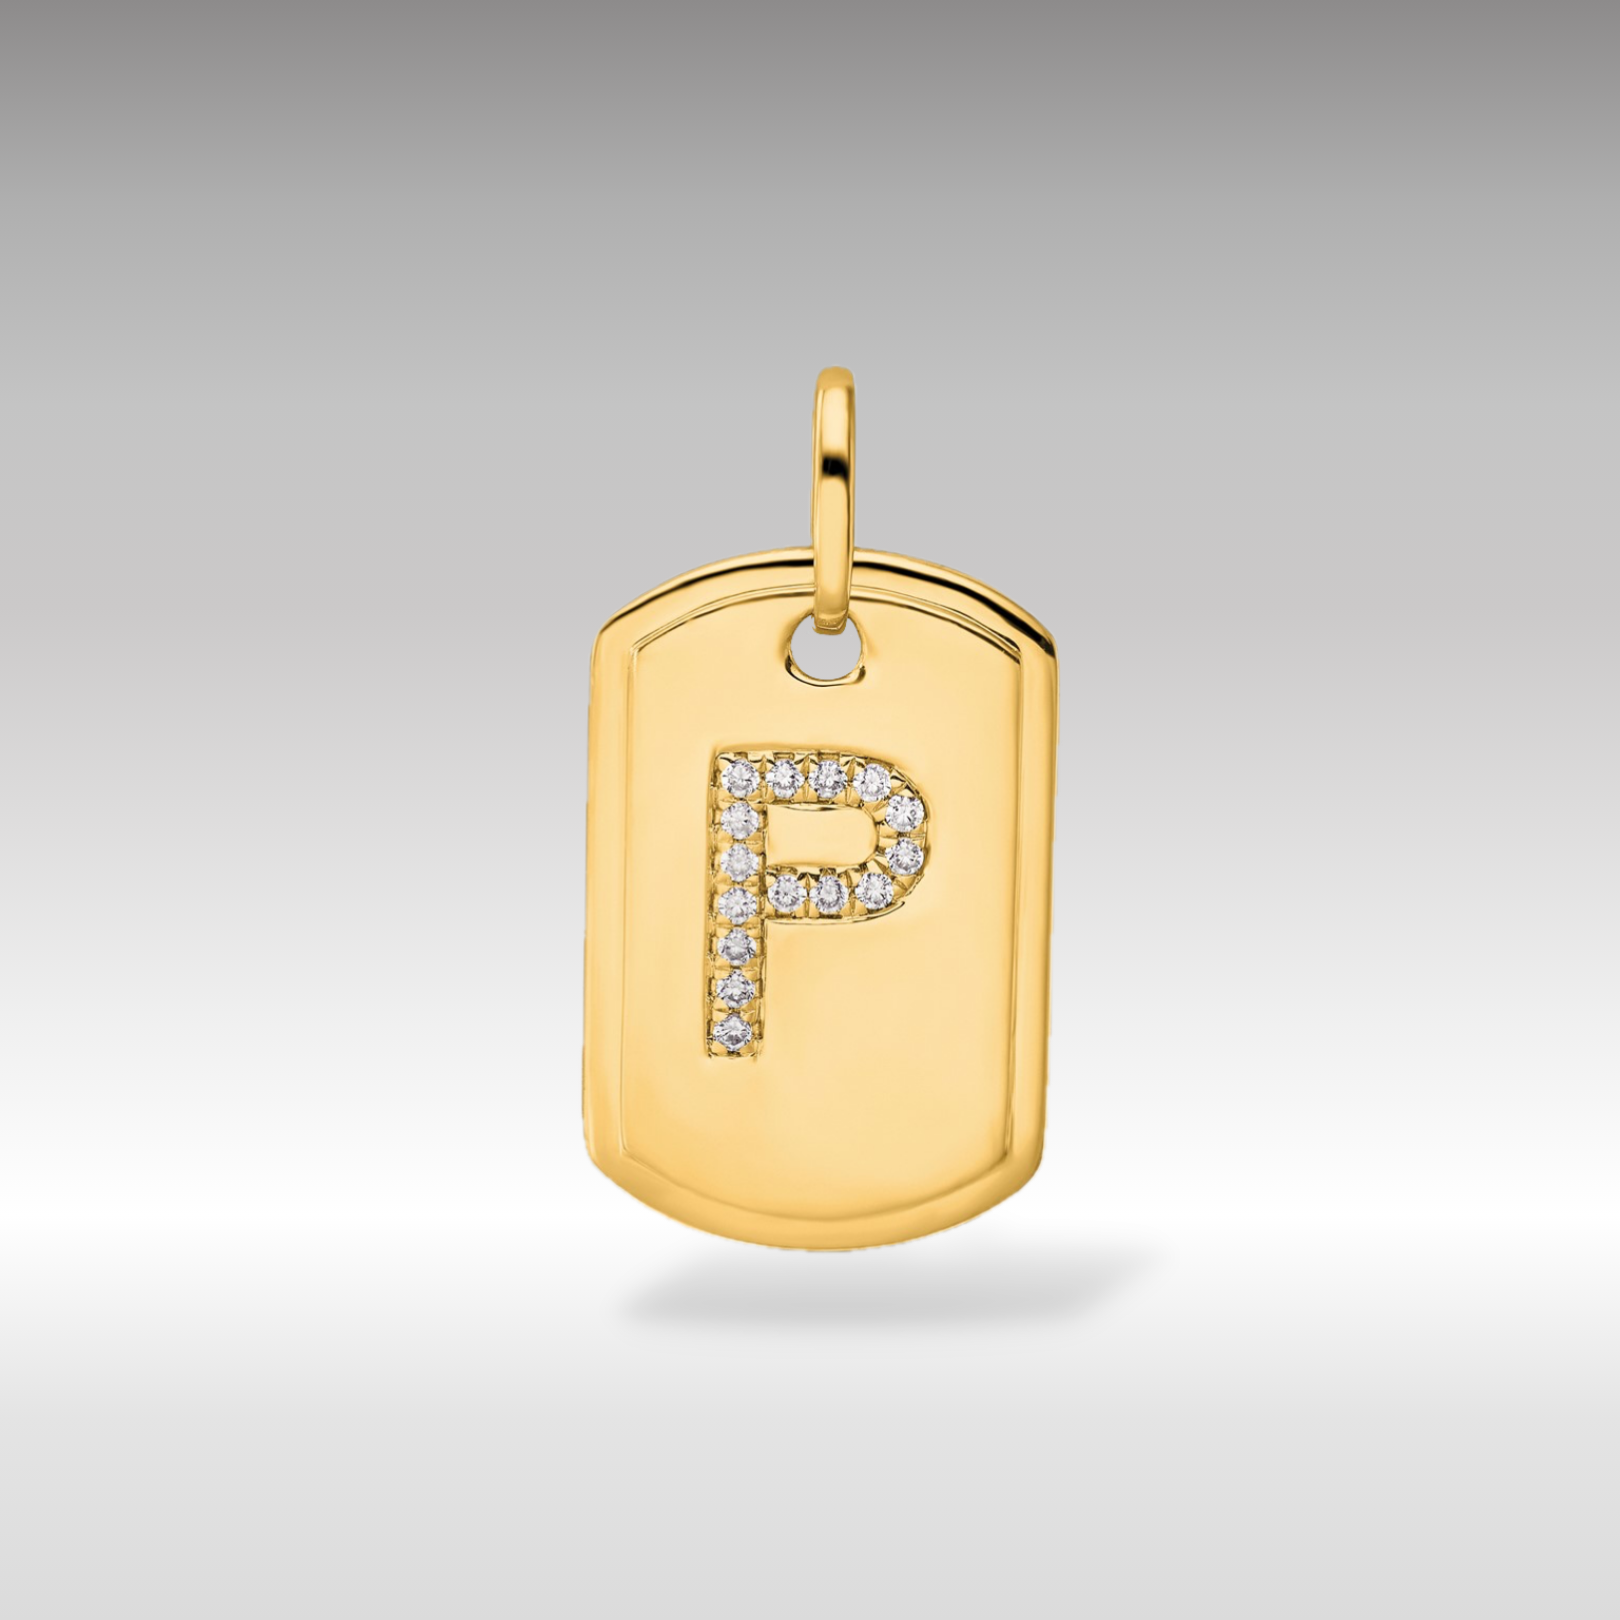 14K Gold Initial "P" Dog Tag With Genuine Diamonds - Charlie & Co. Jewelry